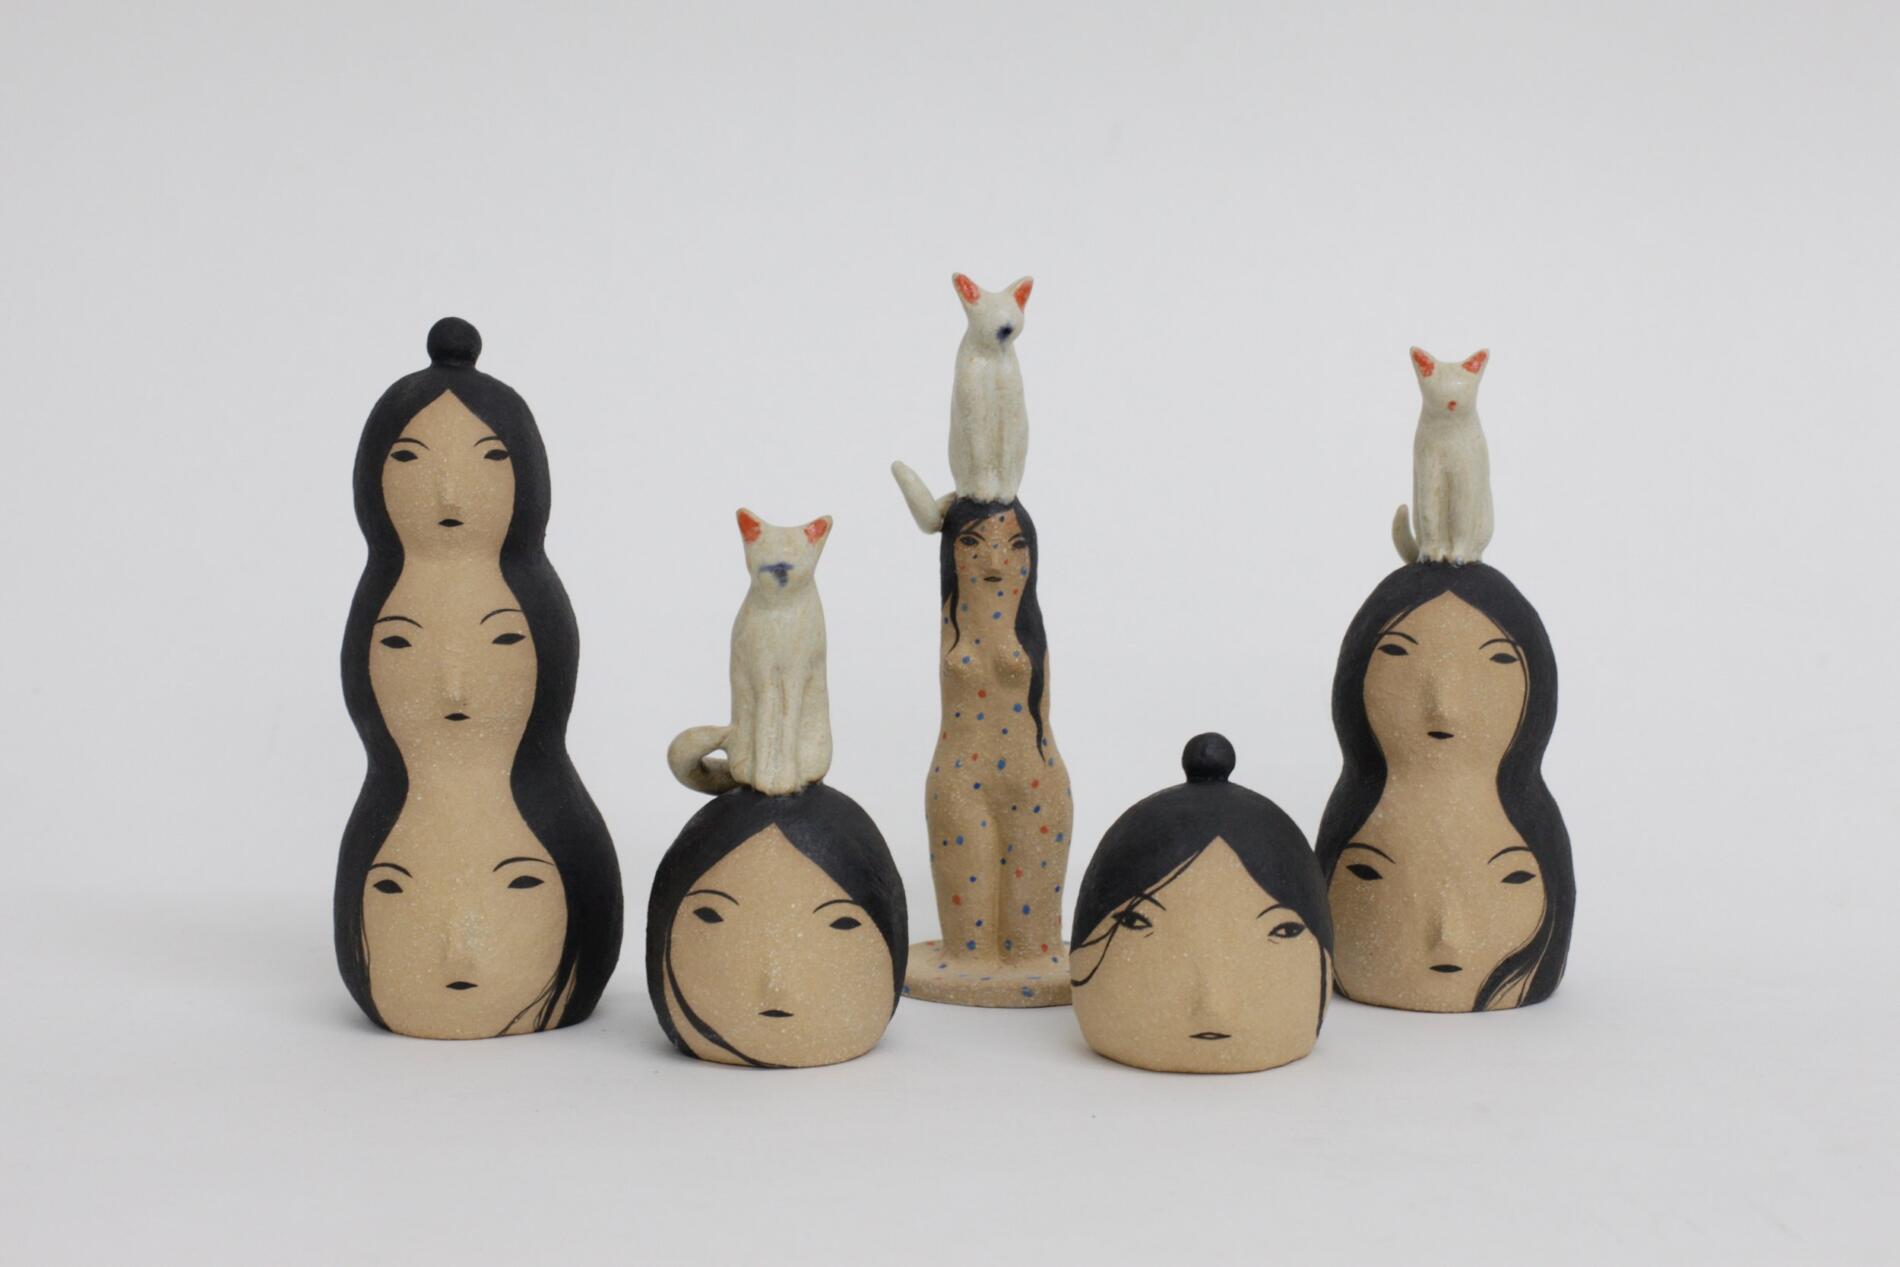 rami kim ceramista personajes en ceramica cabezas ghatos